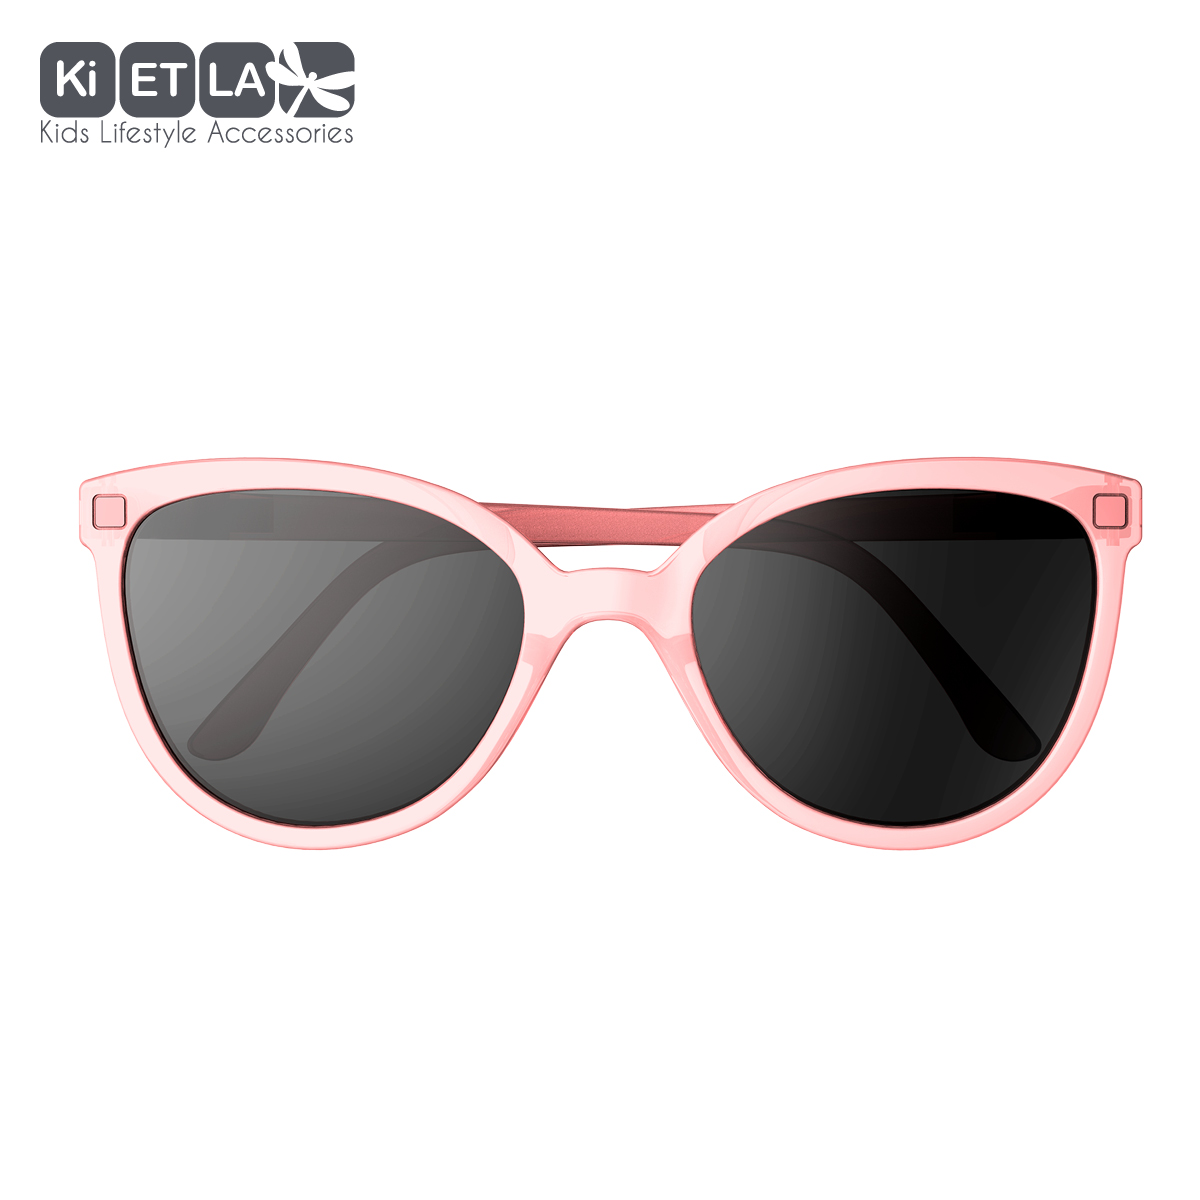 KIETLA slnečné okuliare CraZyg-Zag  BuZZ 6-9 rokov- pink